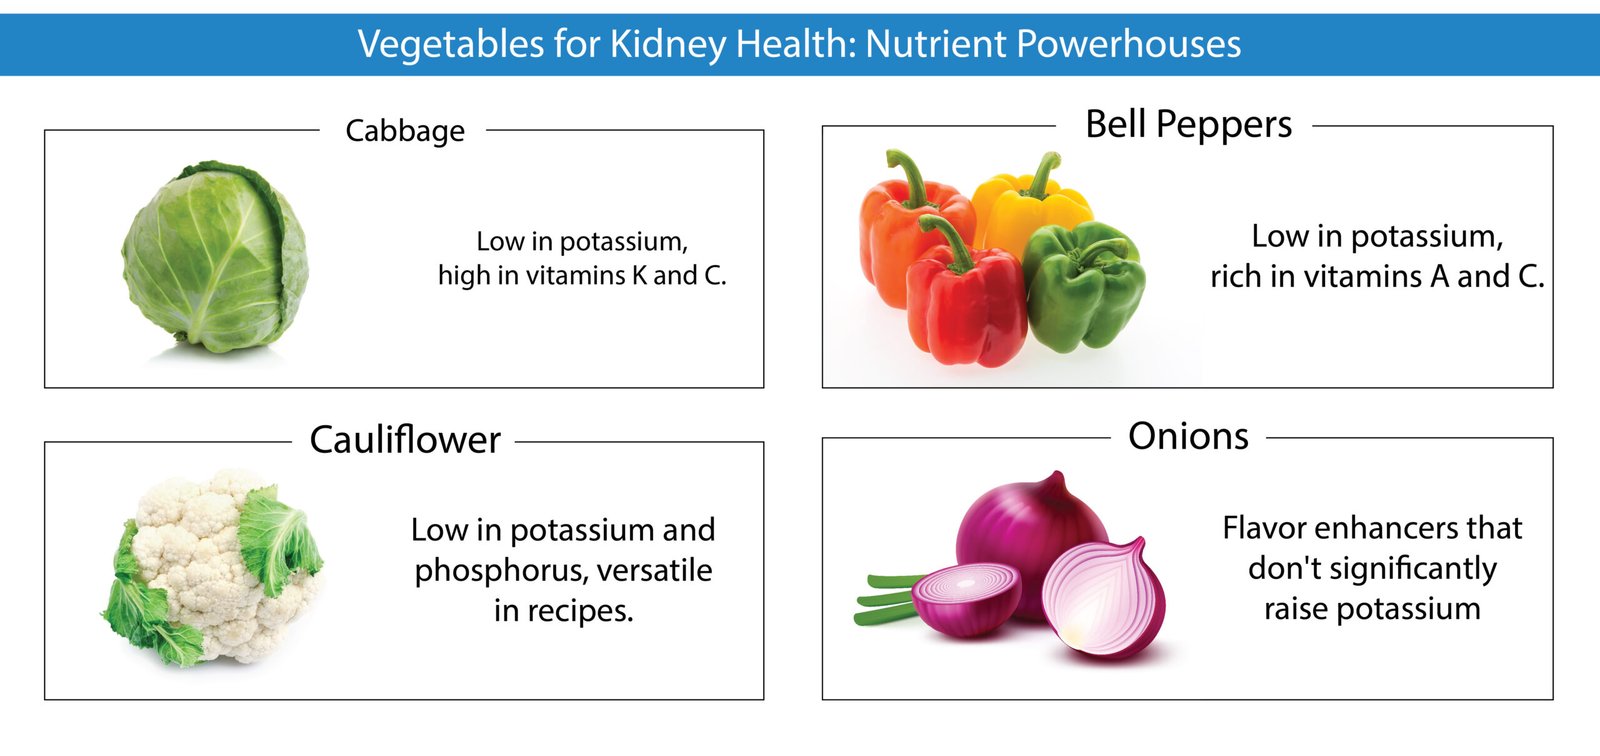 Top Vegetables for Kidney Health